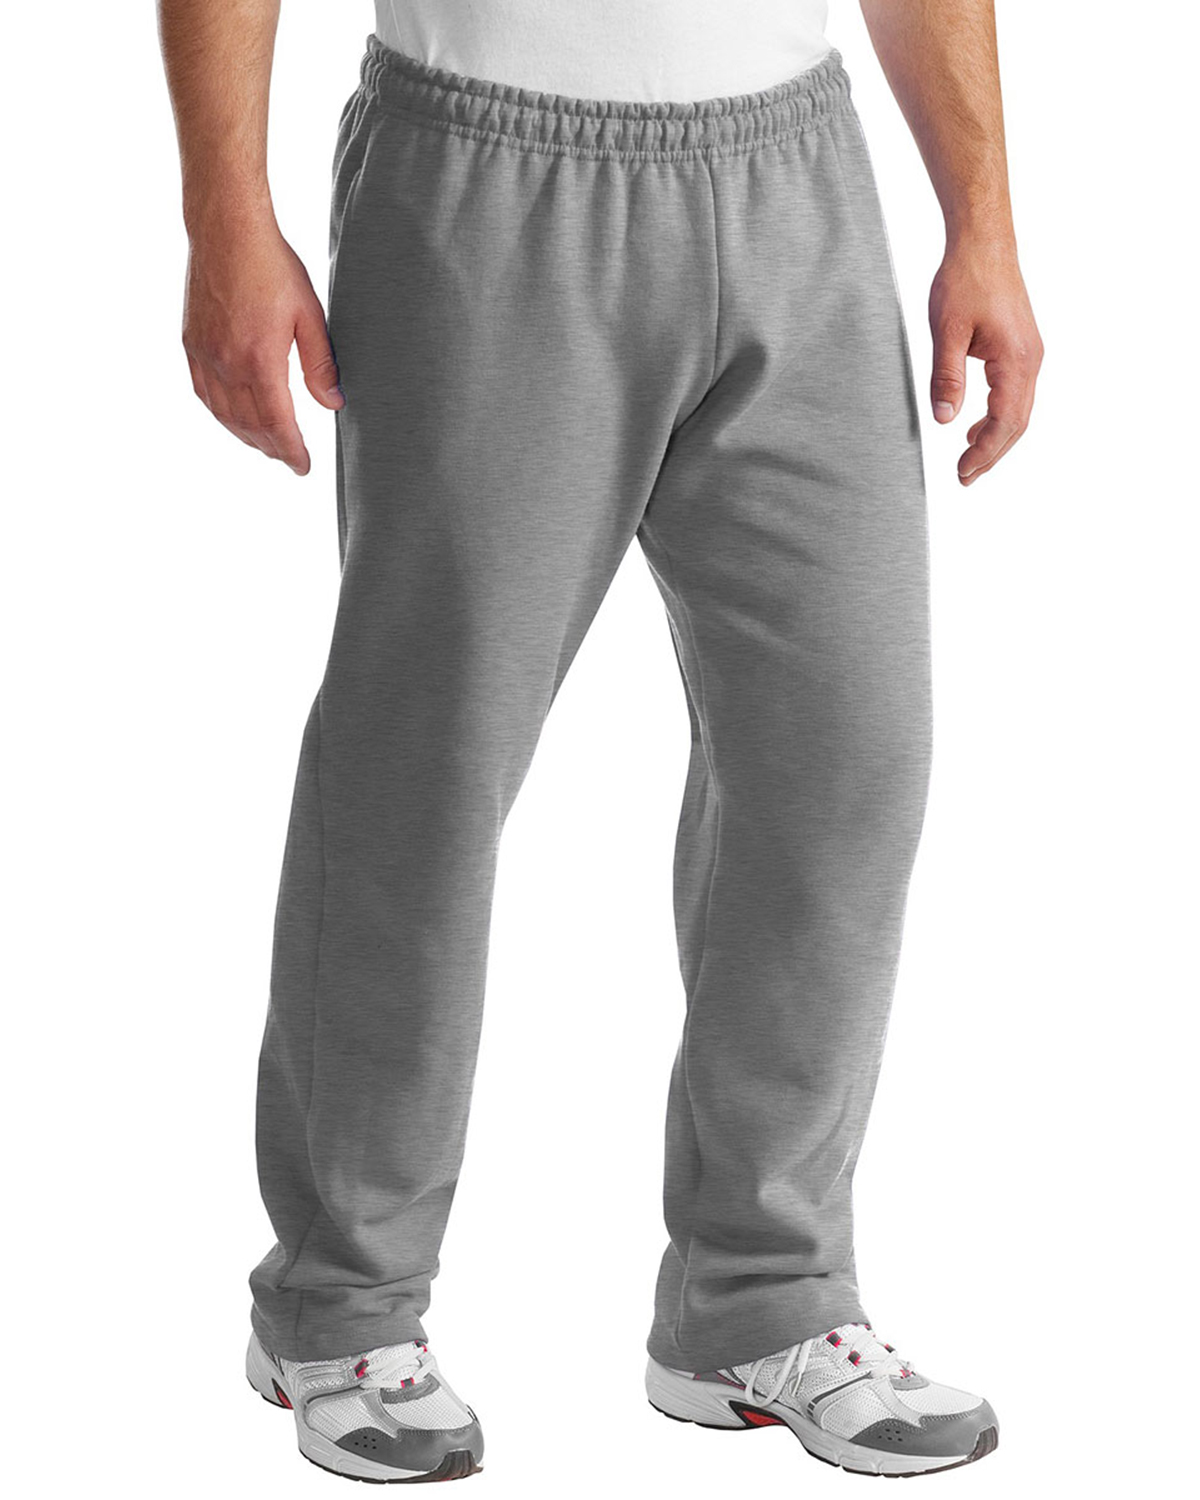 Mens Ultra Blend Open Bottom Sweatpant - Work Pants – Big Size Sweatpants